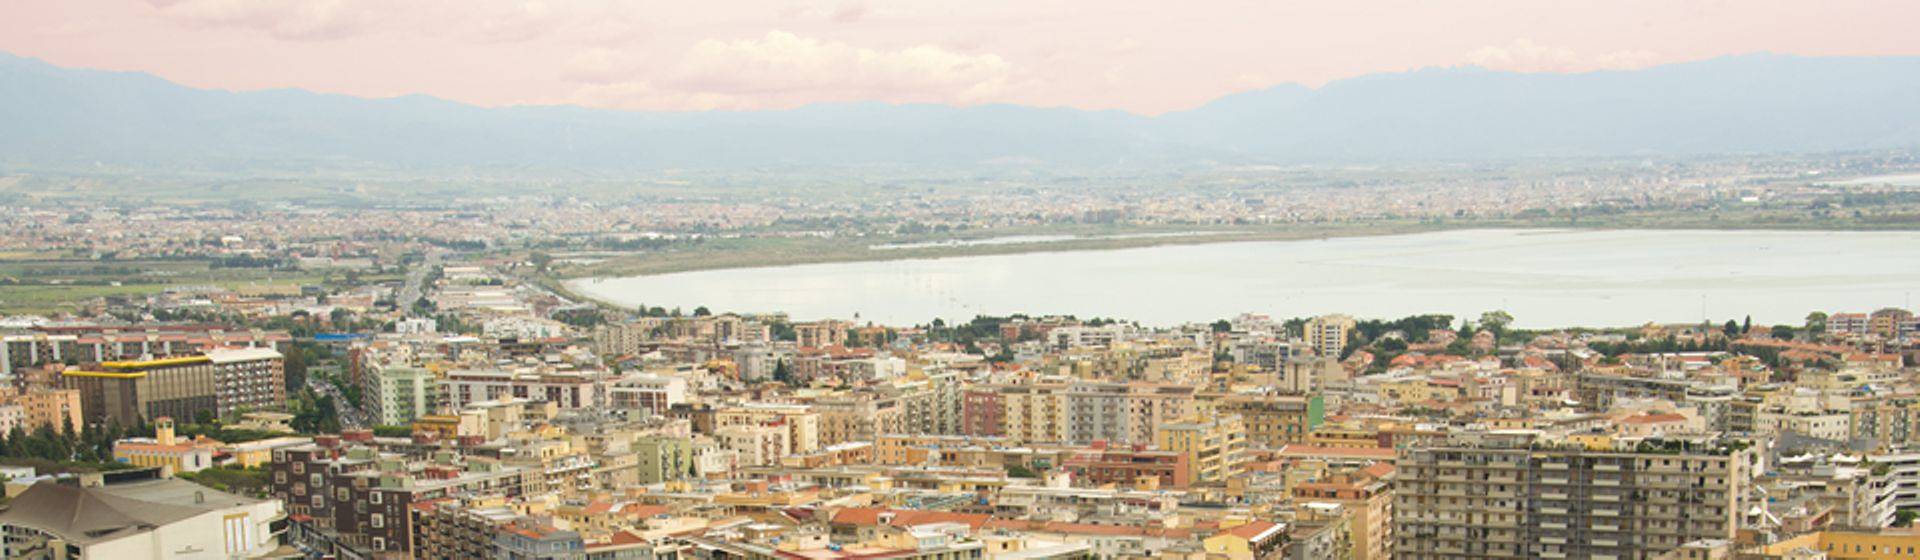 Holidays to Cagliari Image